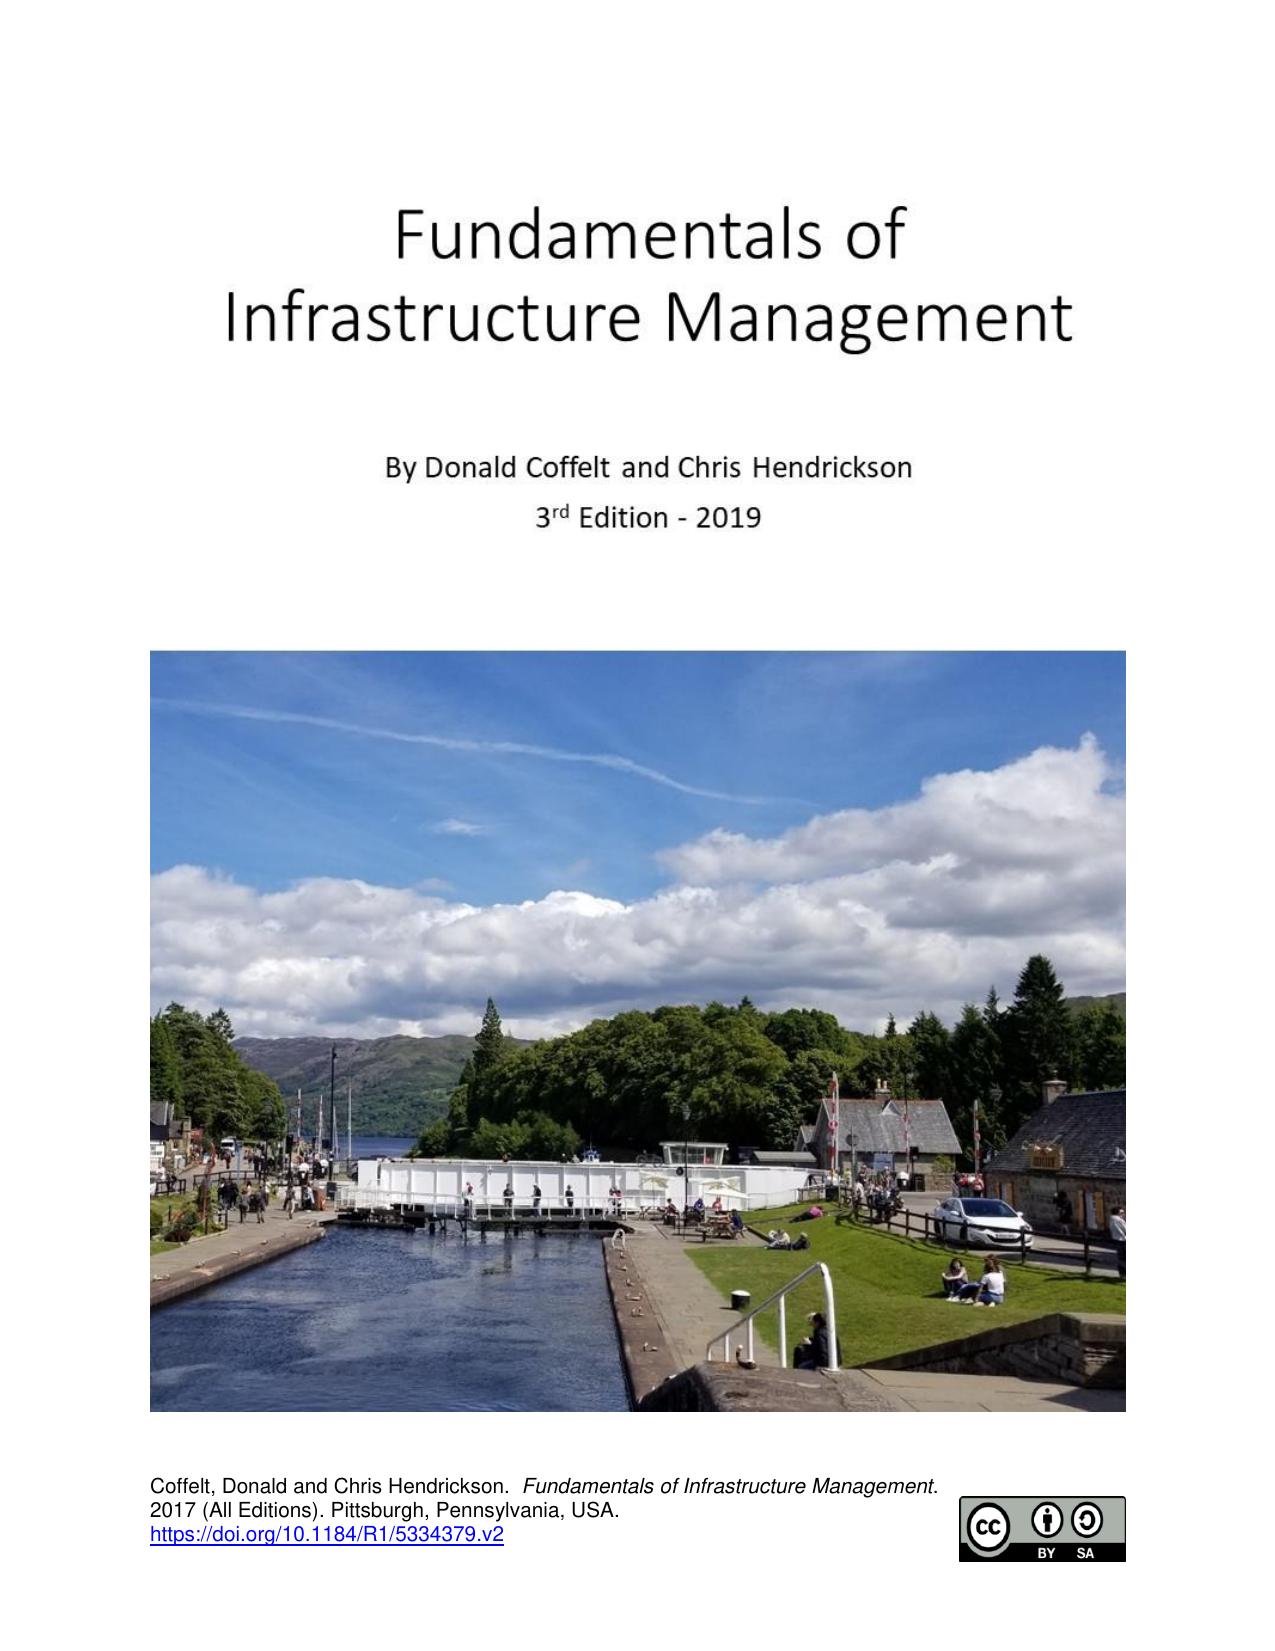 Fundamentals of Infrastructure Management 2019